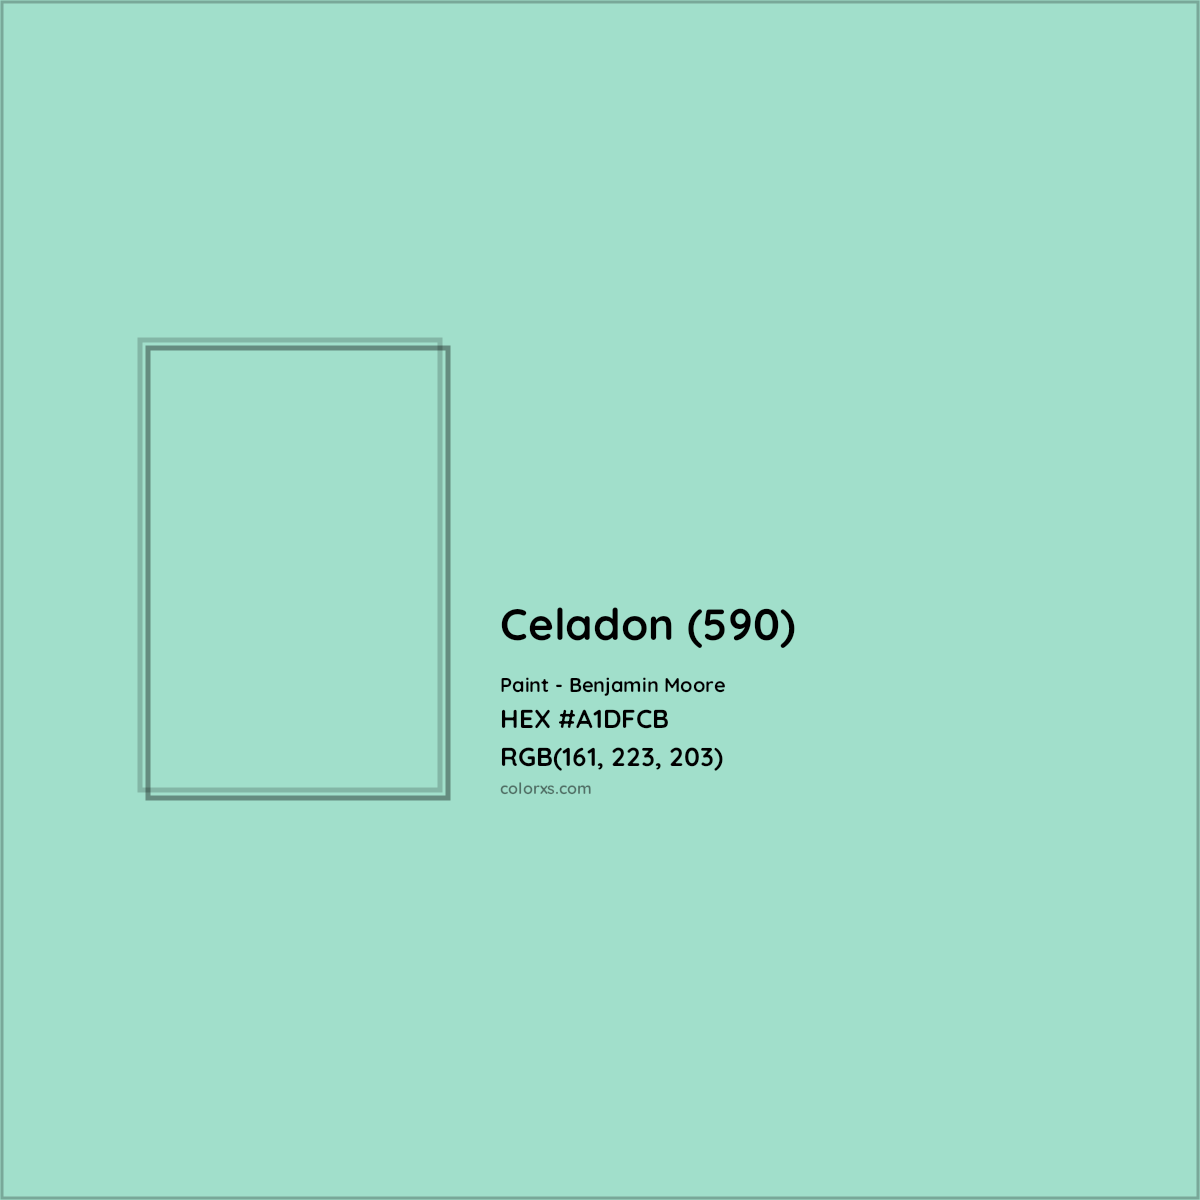 HEX #A1DFCB Celadon (590) Paint Benjamin Moore - Color Code